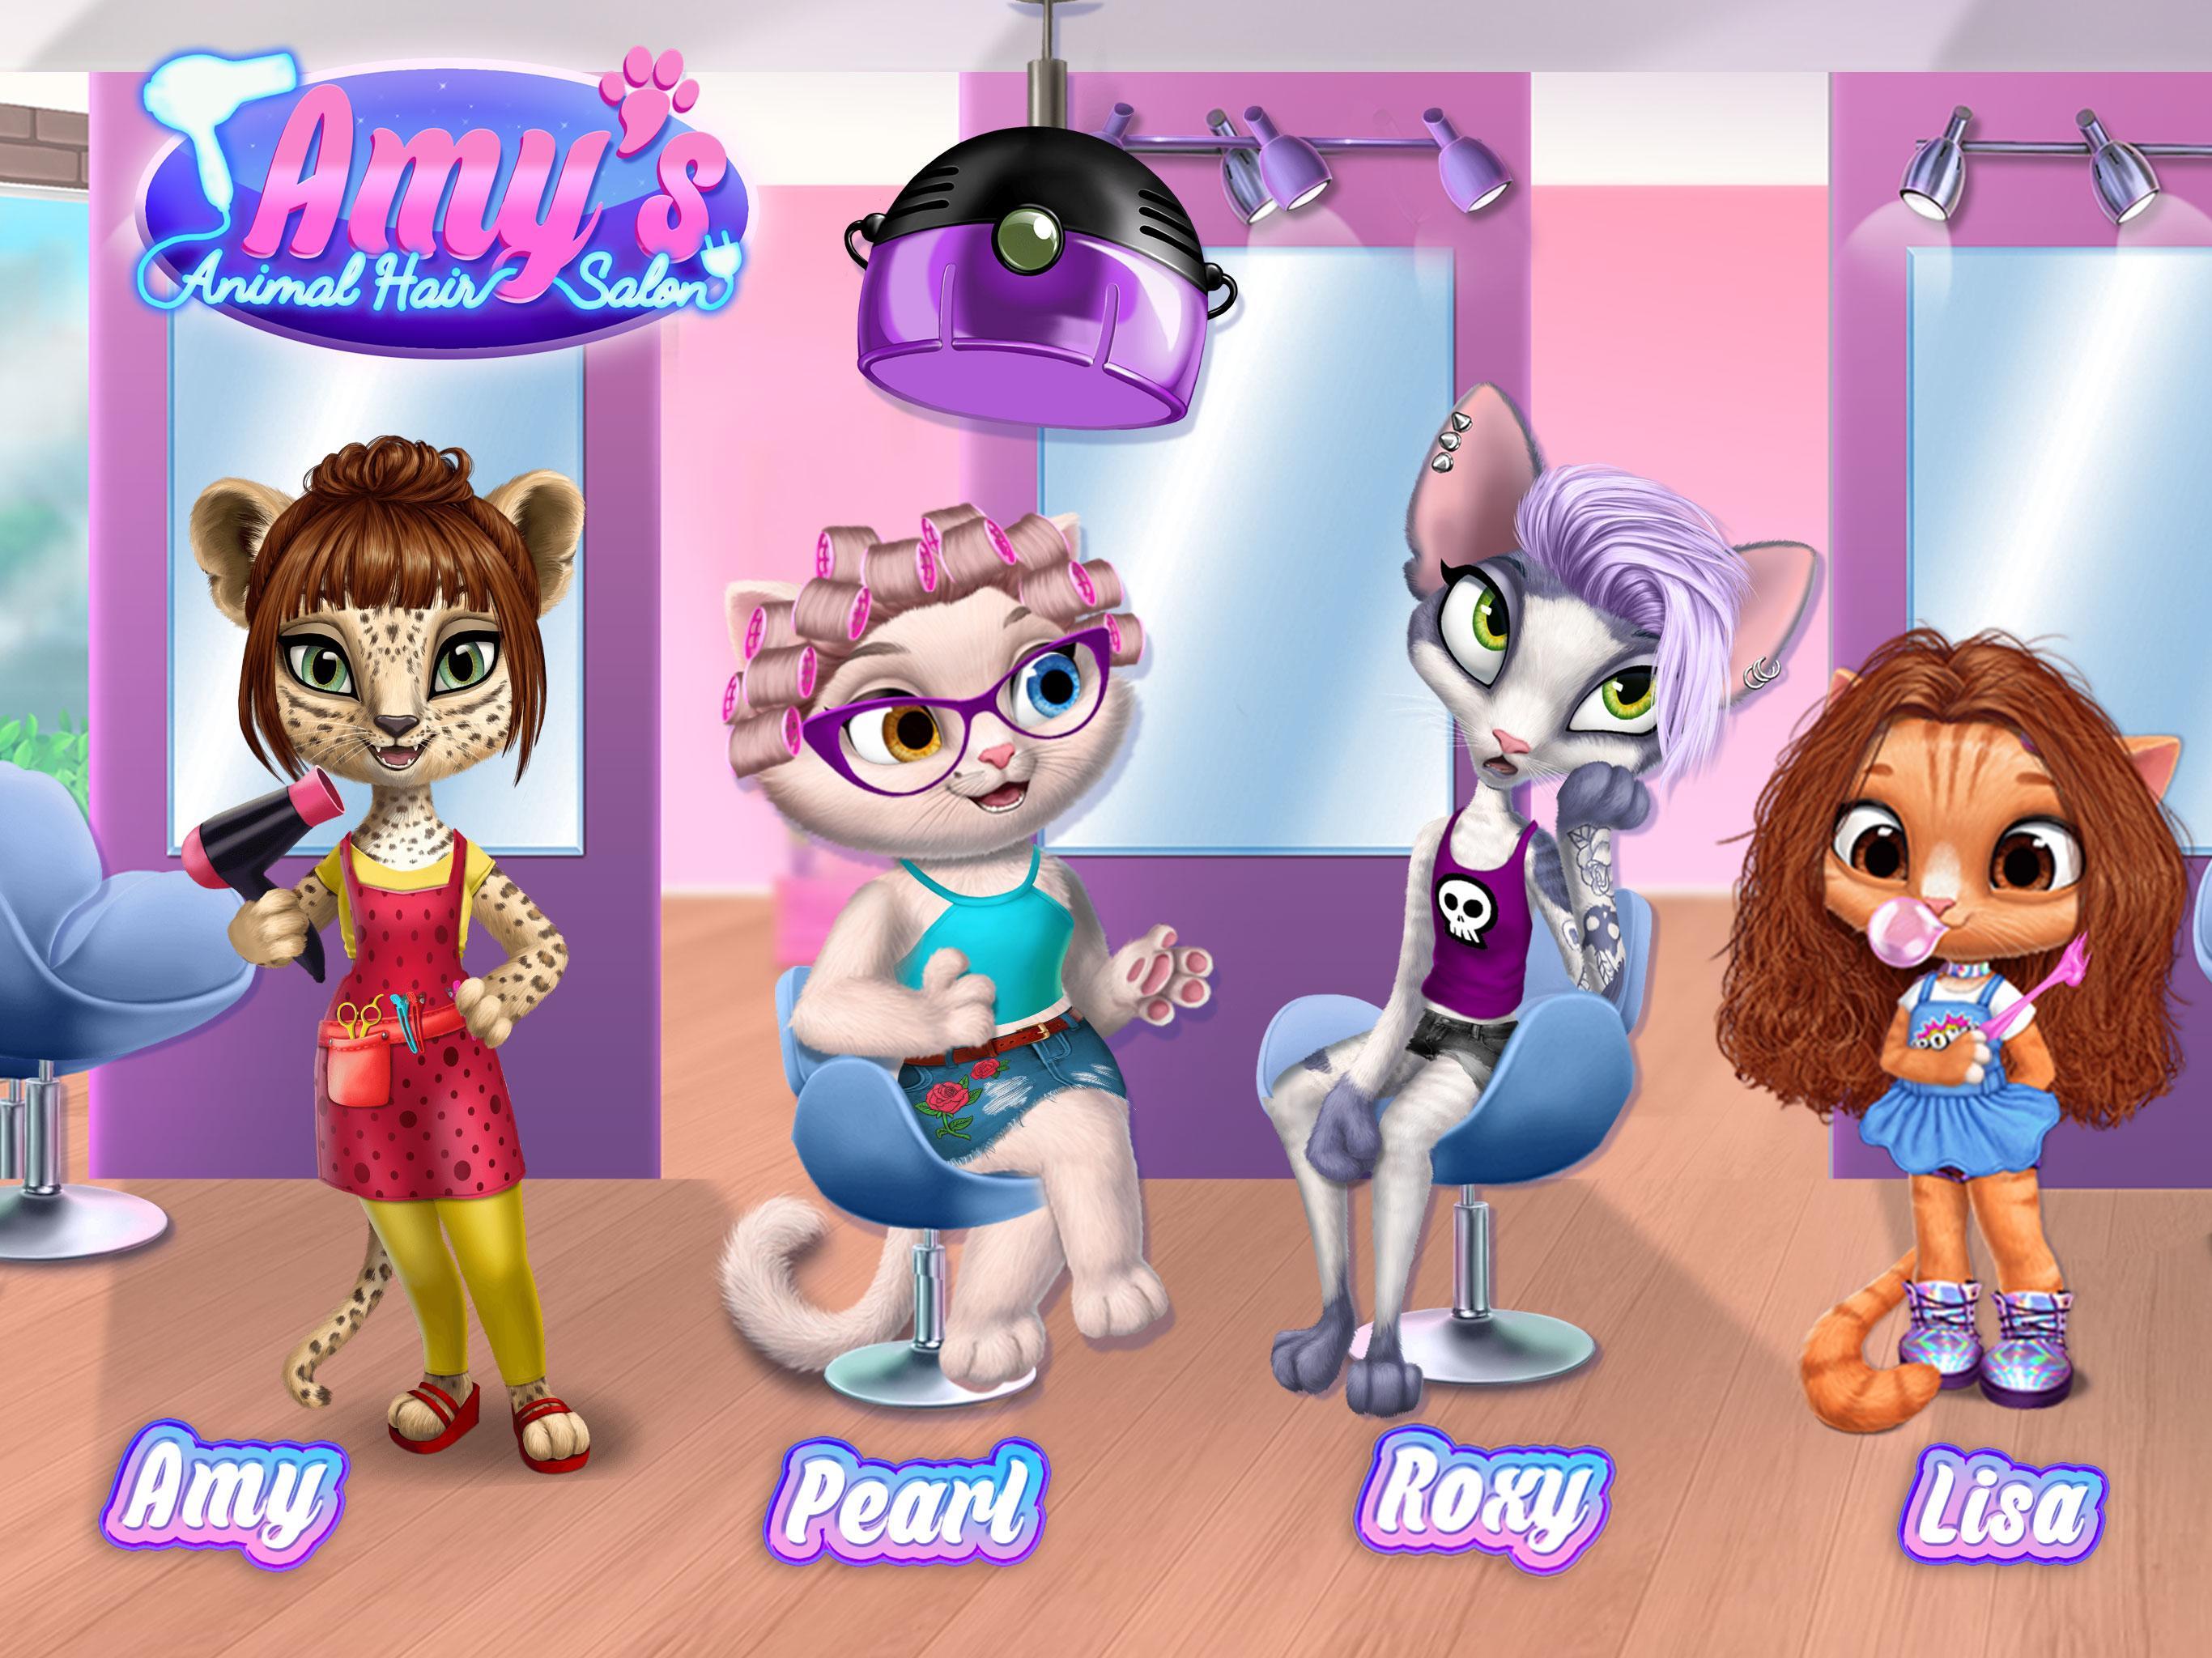 Amy's Animal Hair Salon - Cat Fashion & Hairstyles 4.0.50002 Screenshot 13